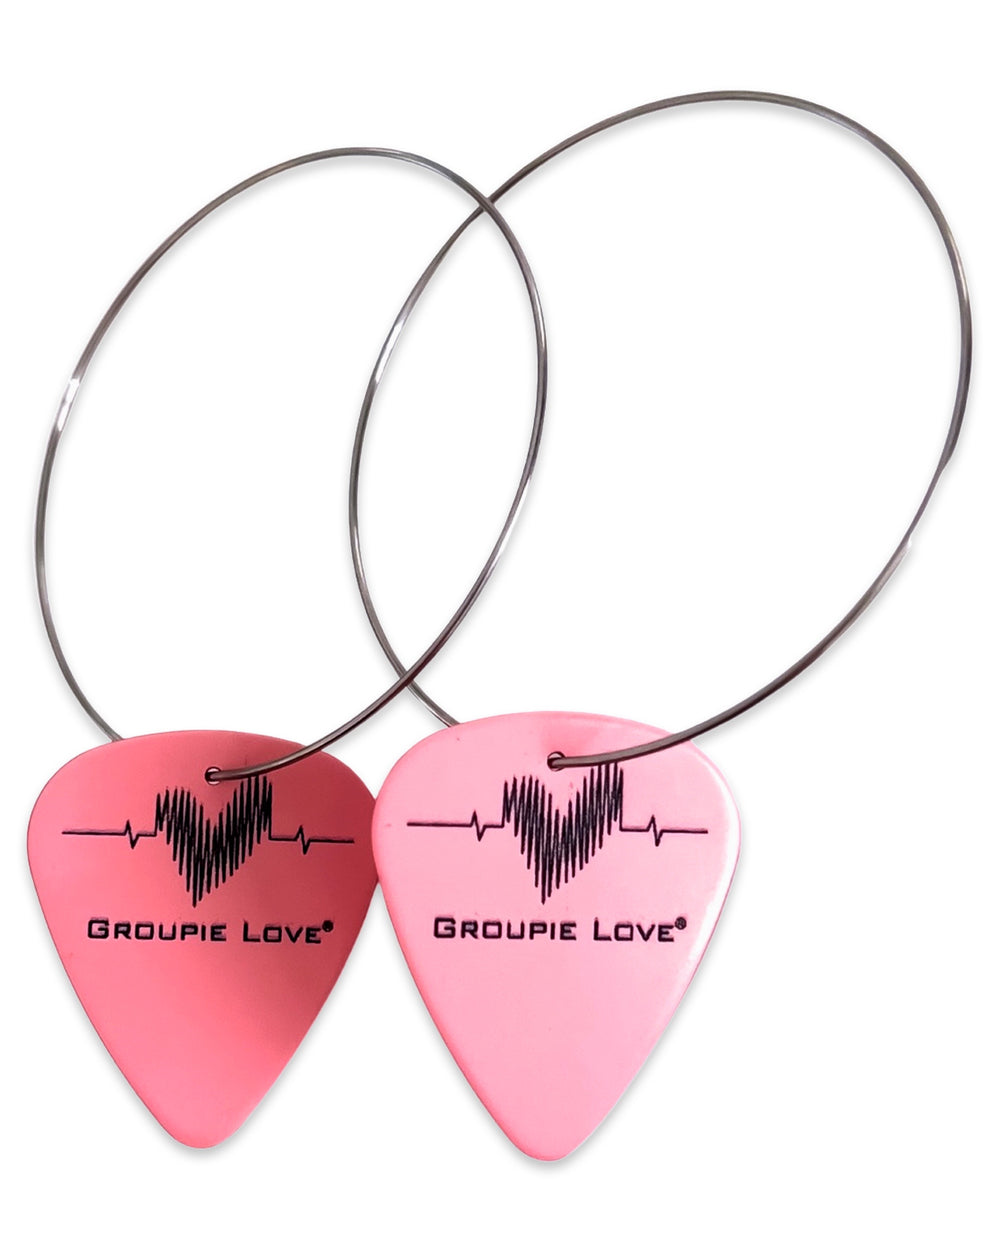 WS Groupie Love Pink Single Guitar Pick Earrings